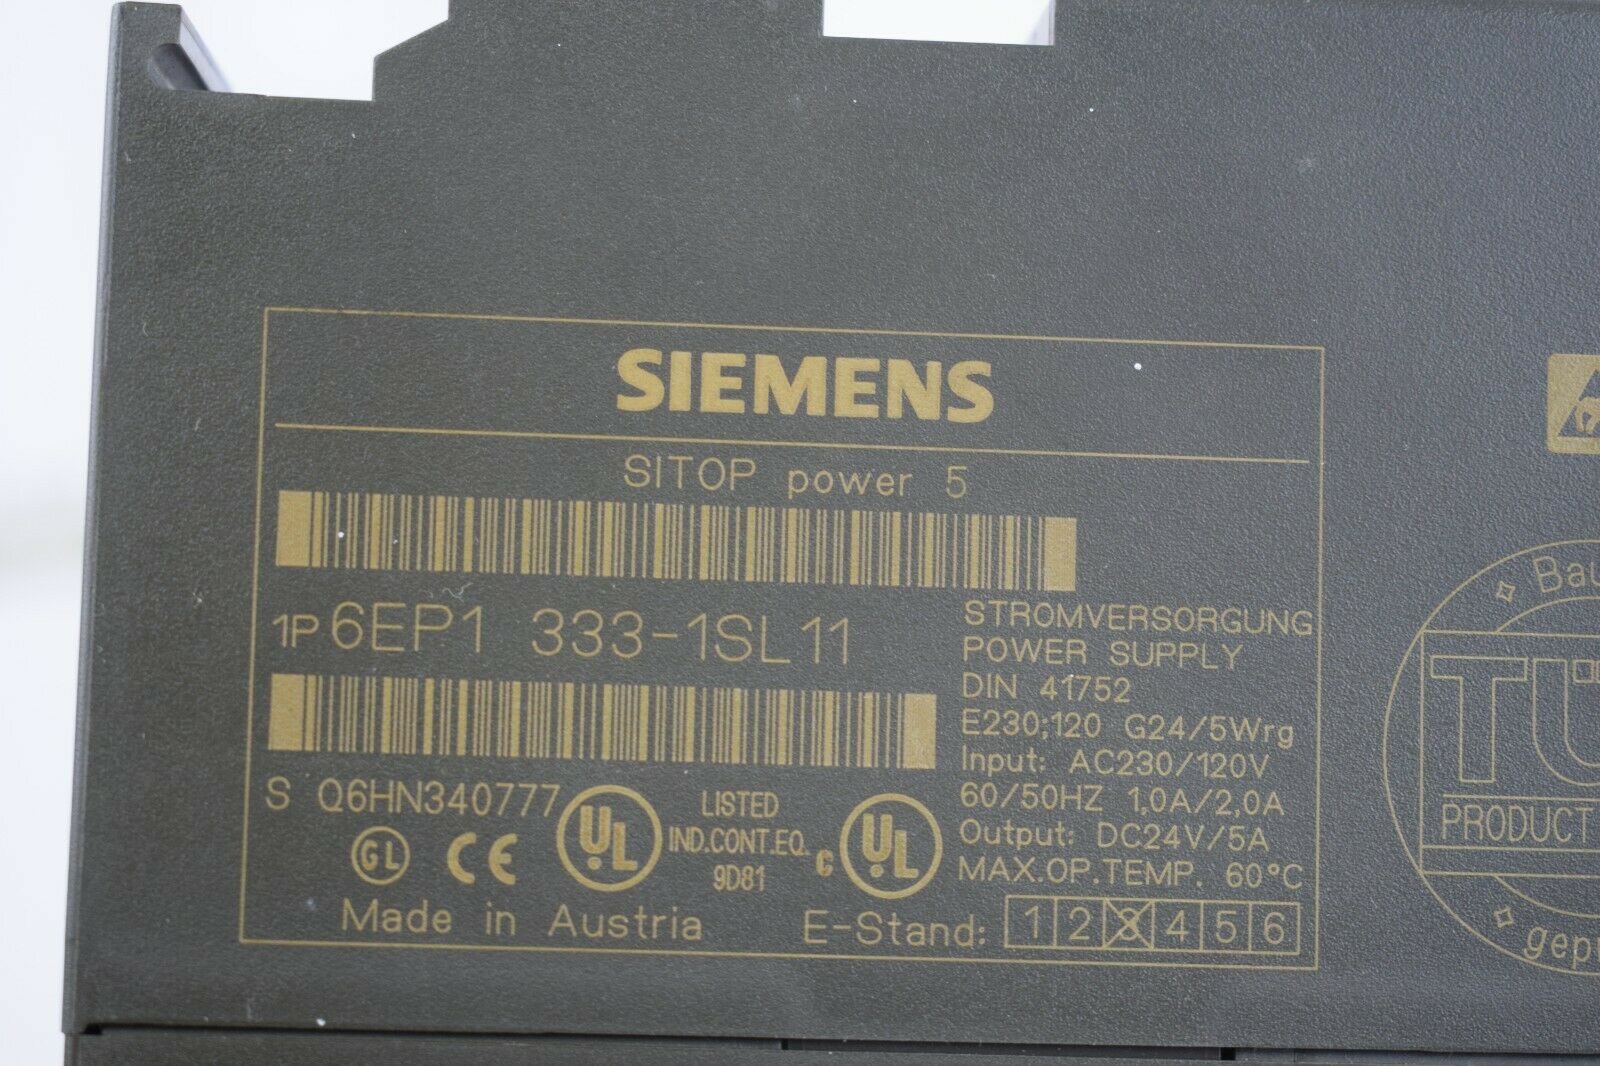 Siemens sitop Power 5 6EP1 333-1SL11 ( 6EP1333-1SL11 ) E.3